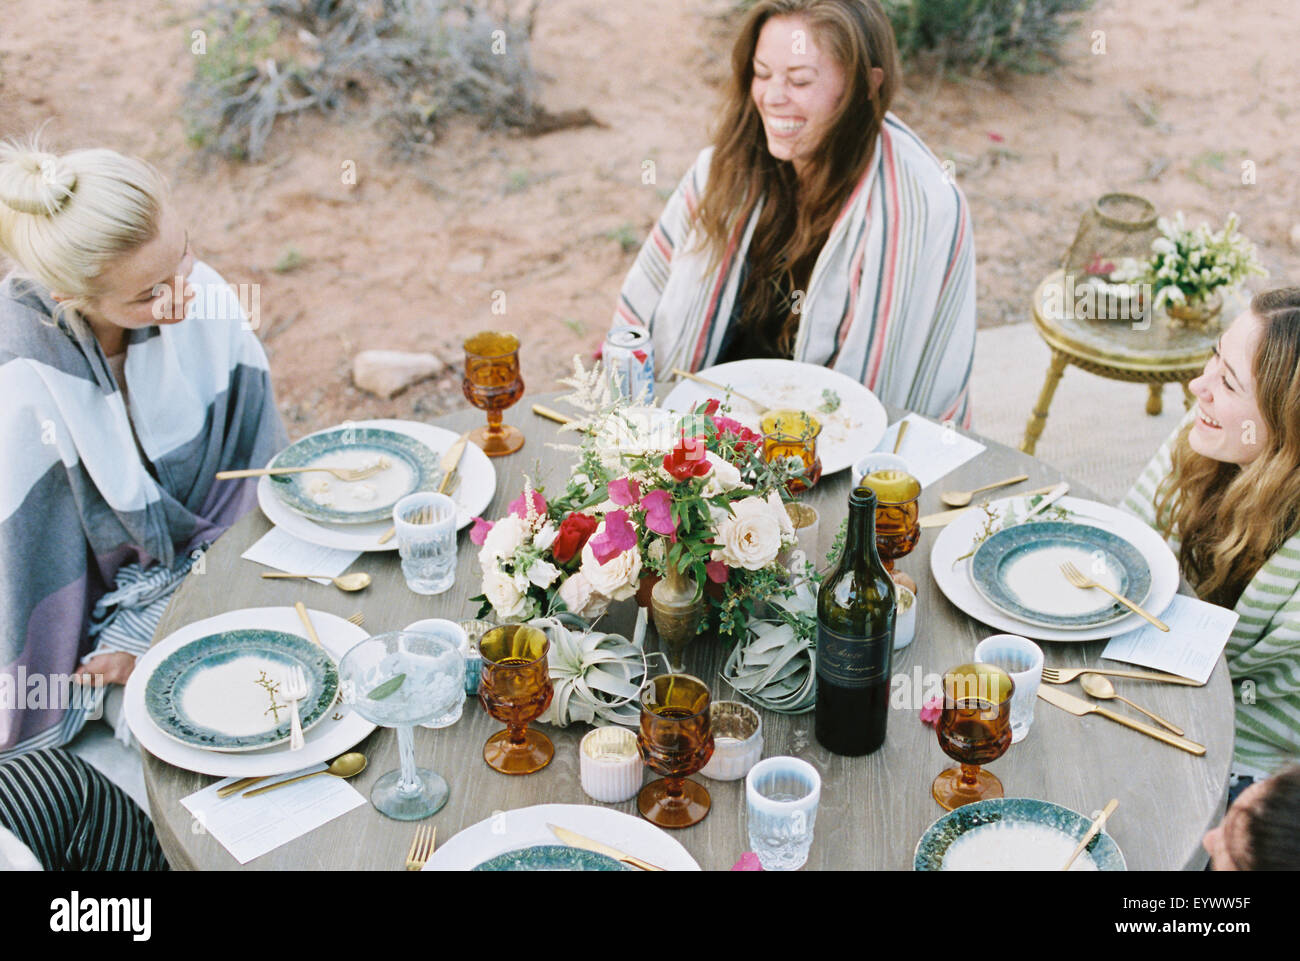 A small group of women enjoying an outdoor meal in a desert. Stock Photo